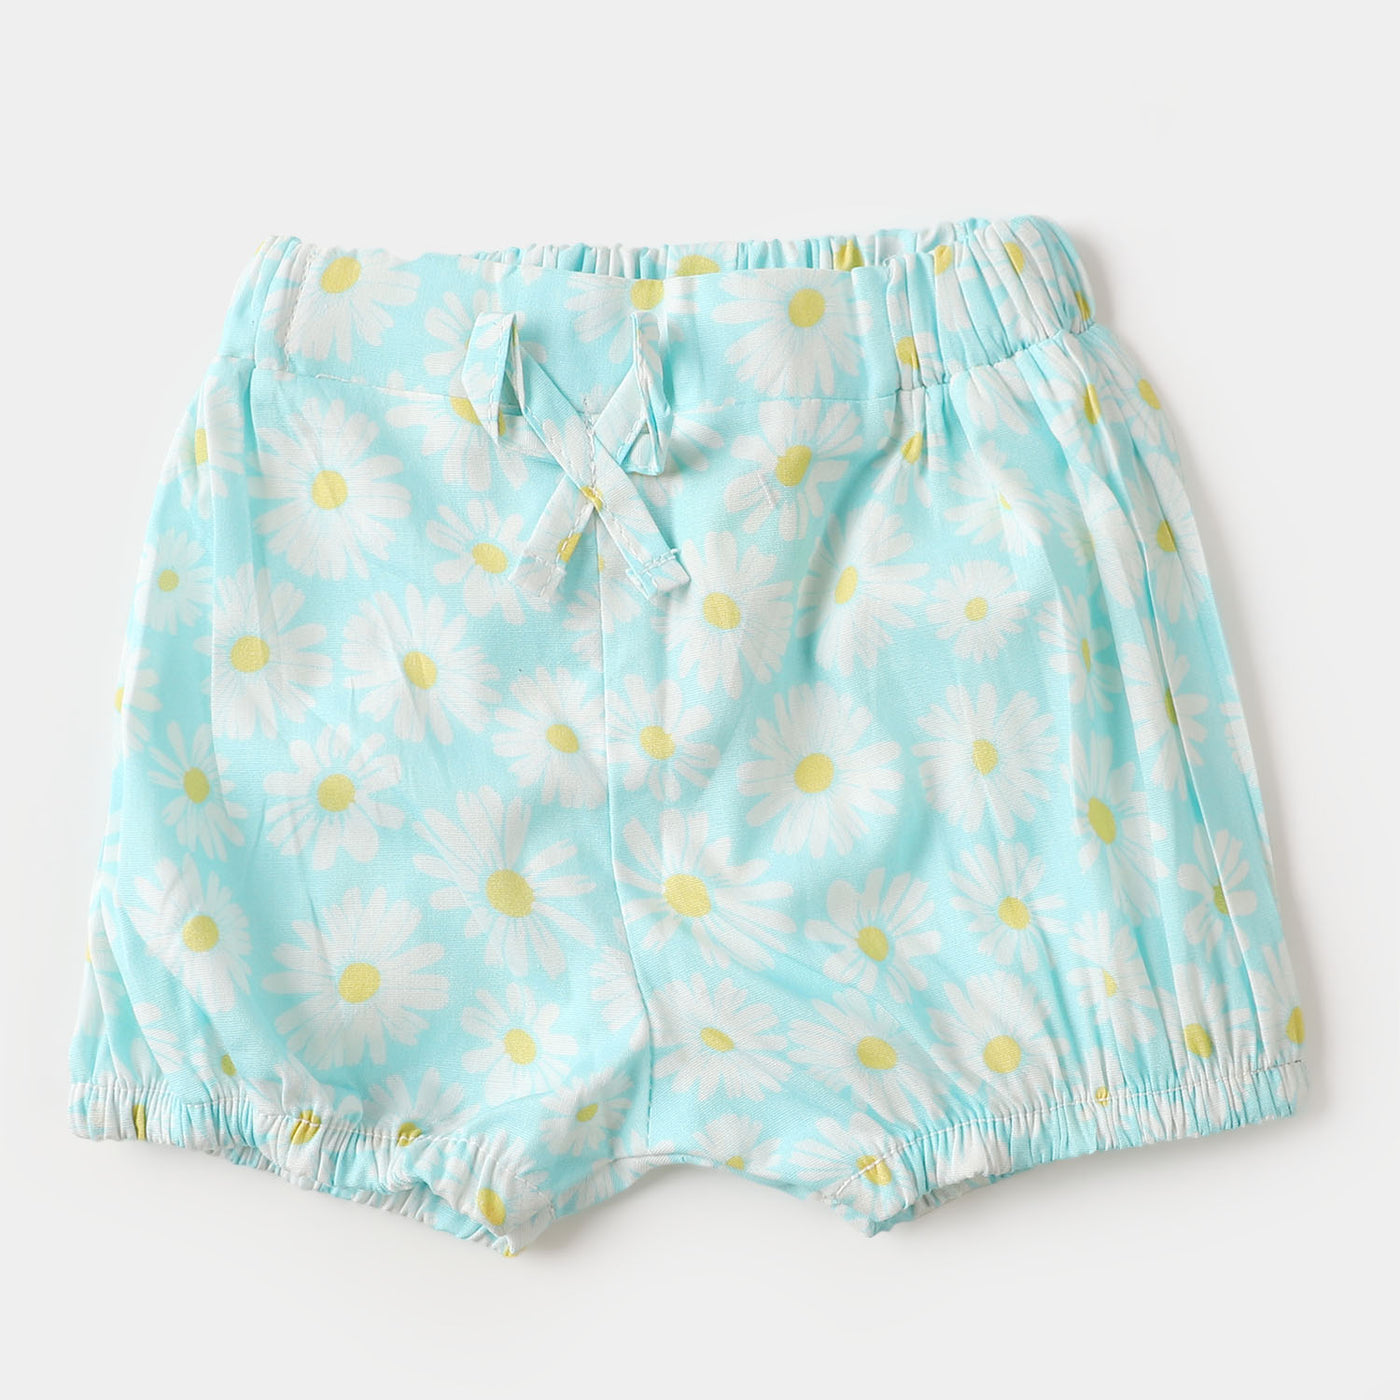 Infant Girls Woven 2PC Suit Sun Flower - SKY BLUE